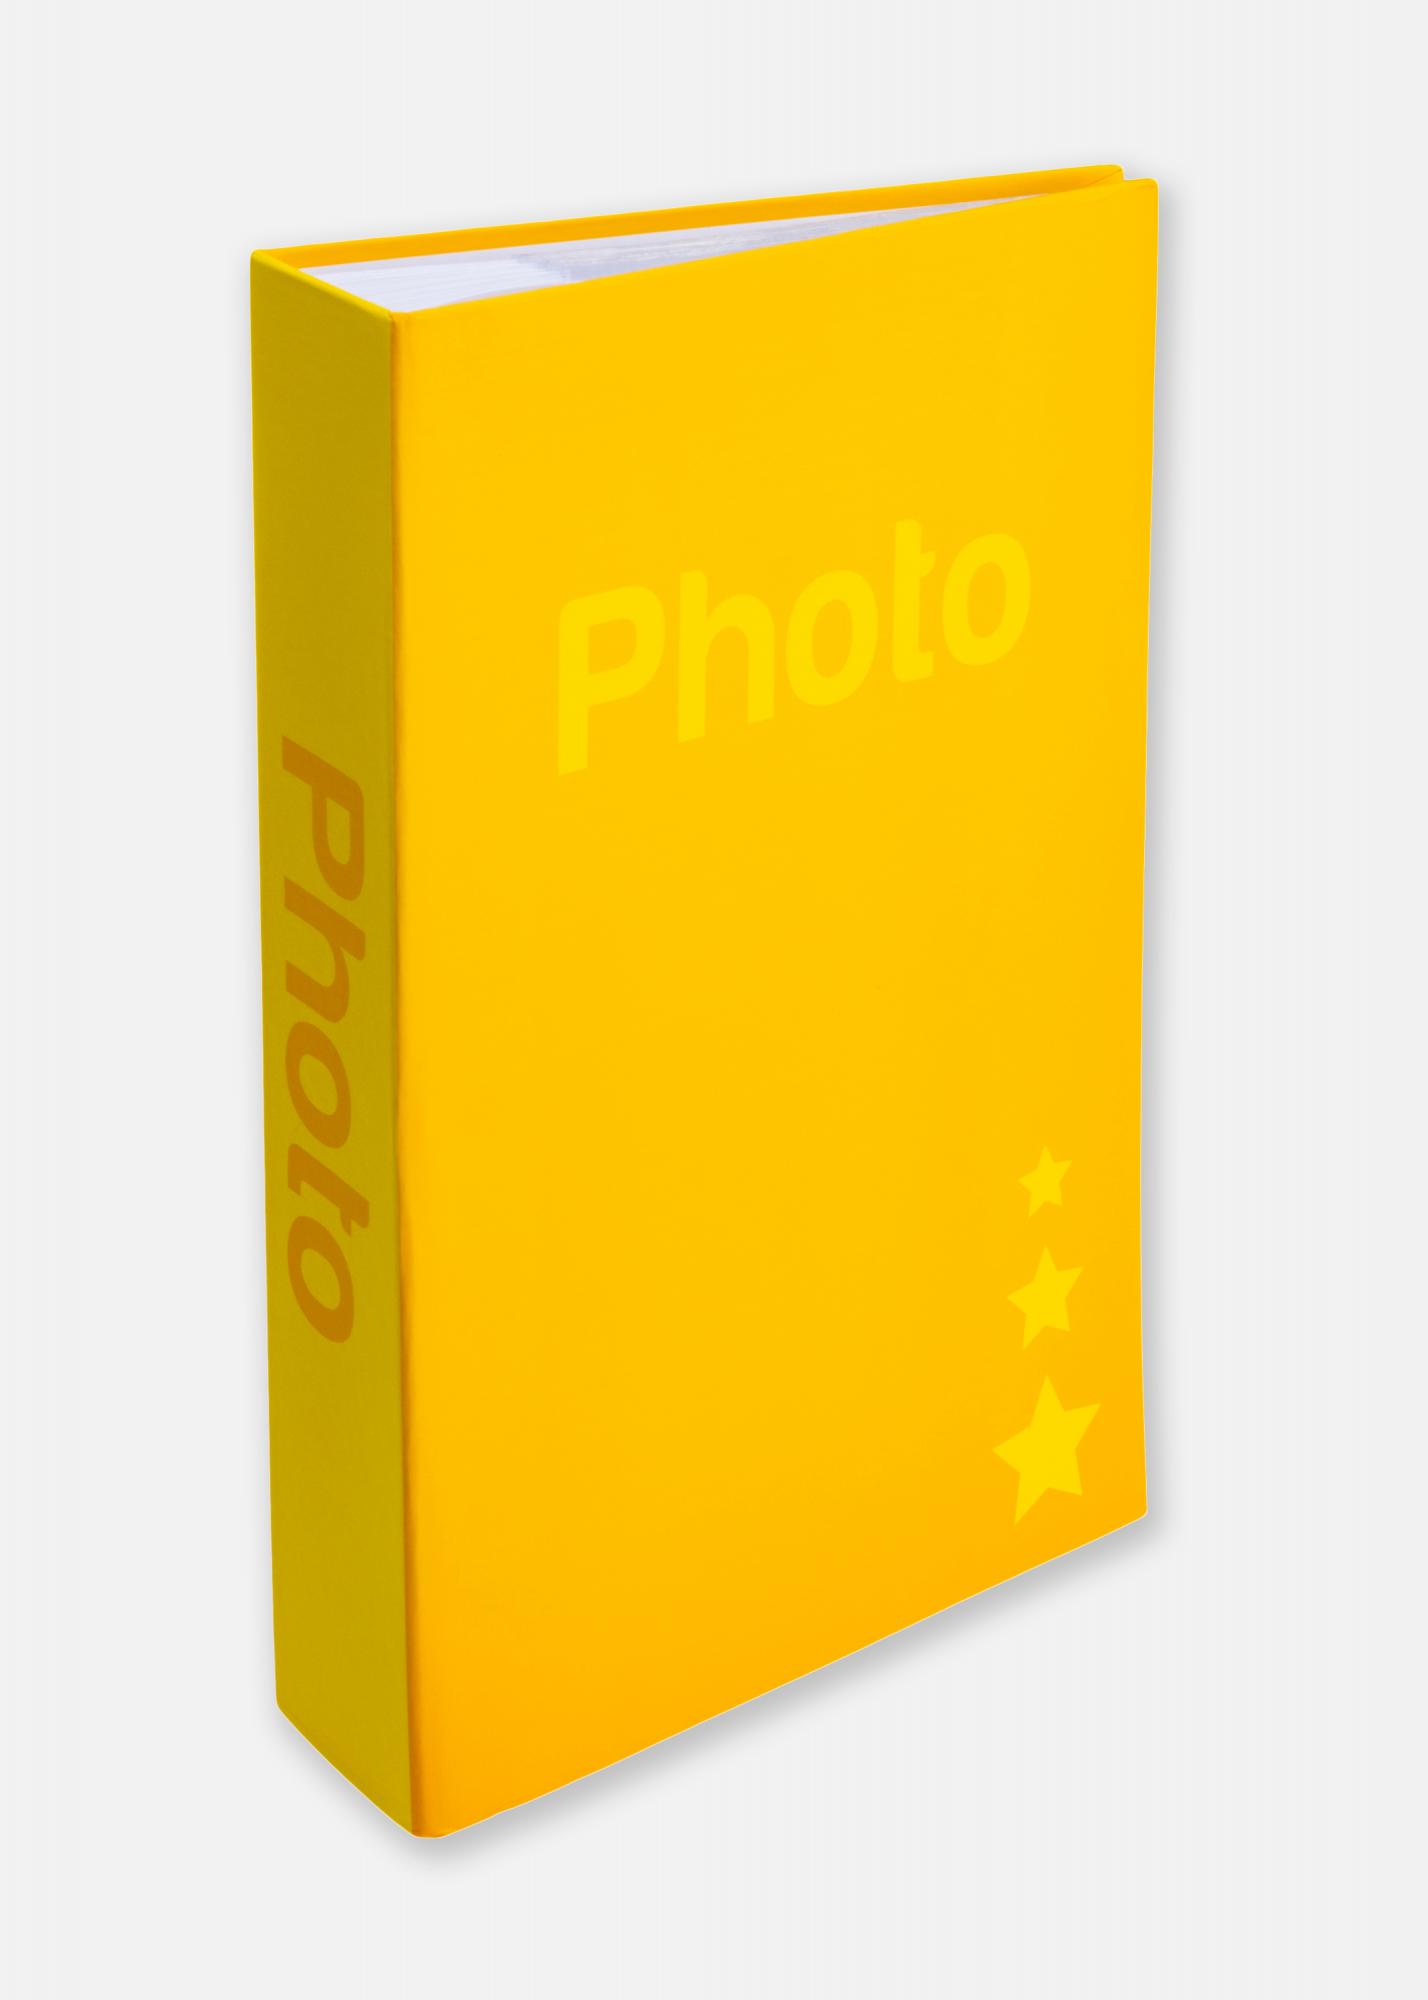 Buy ZEP Photo album Light blue - 402 Pictures in 11x15 cm here